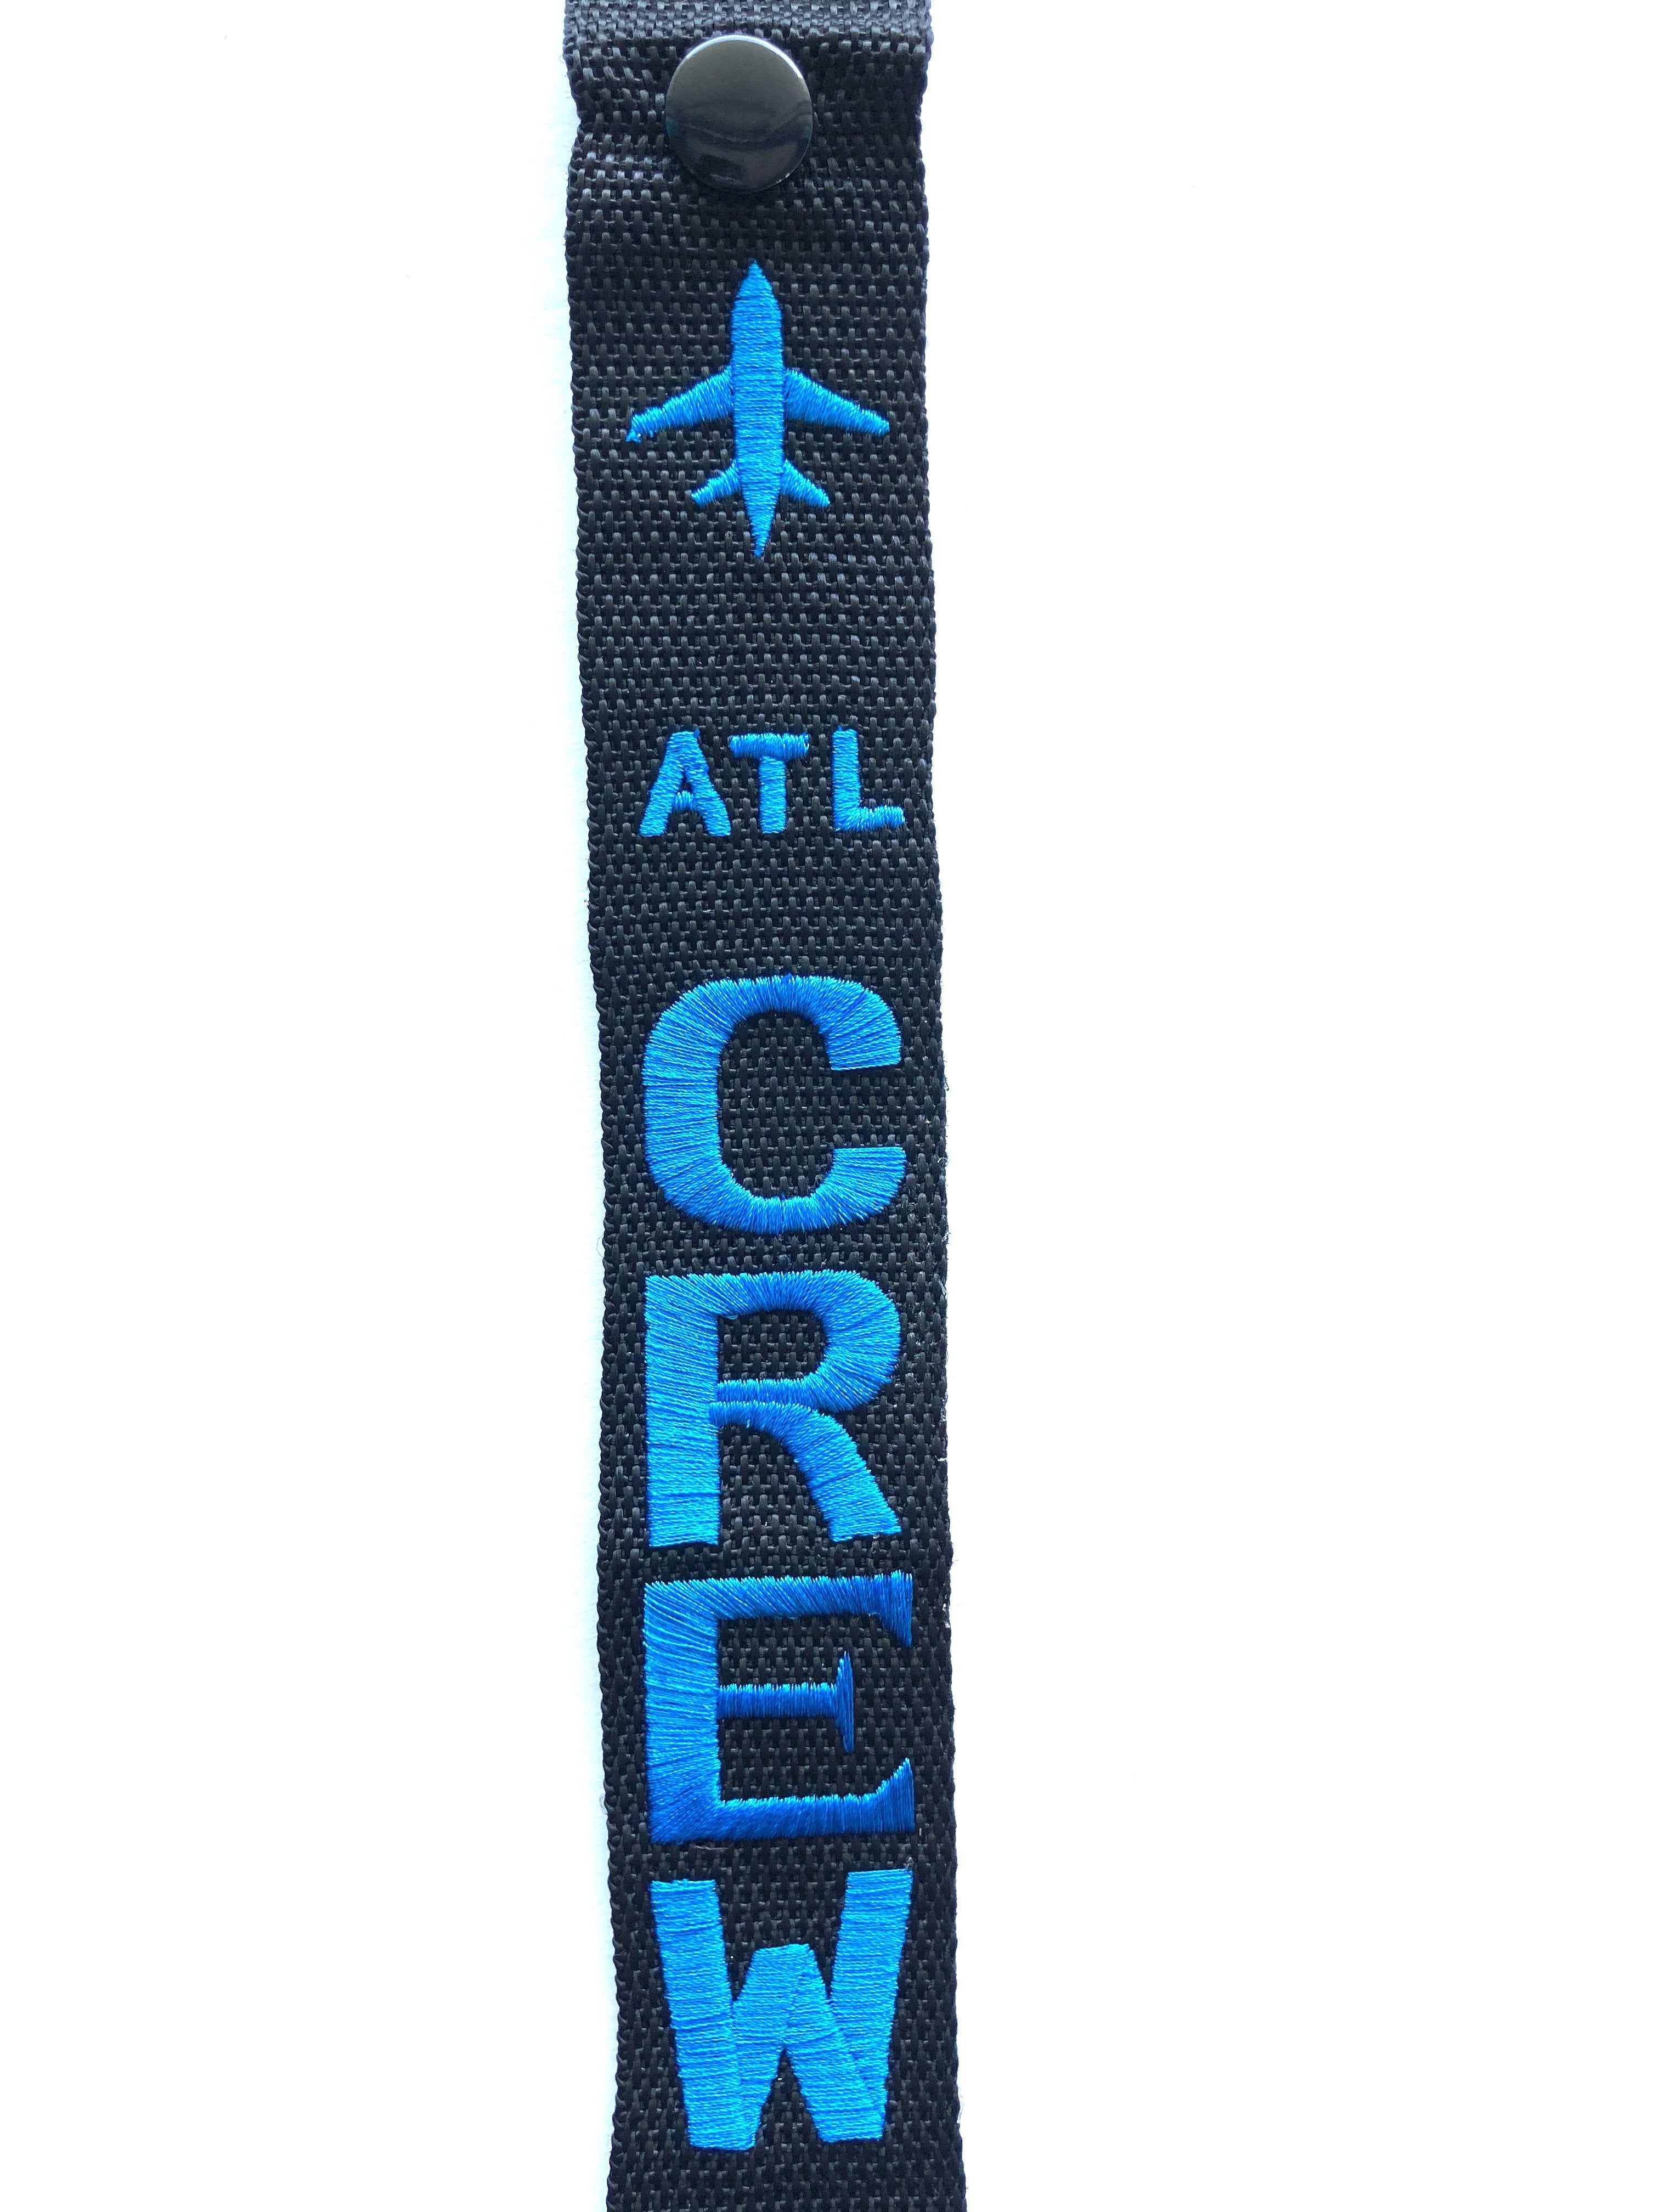 CREW Luggage Tag - ATL Blue